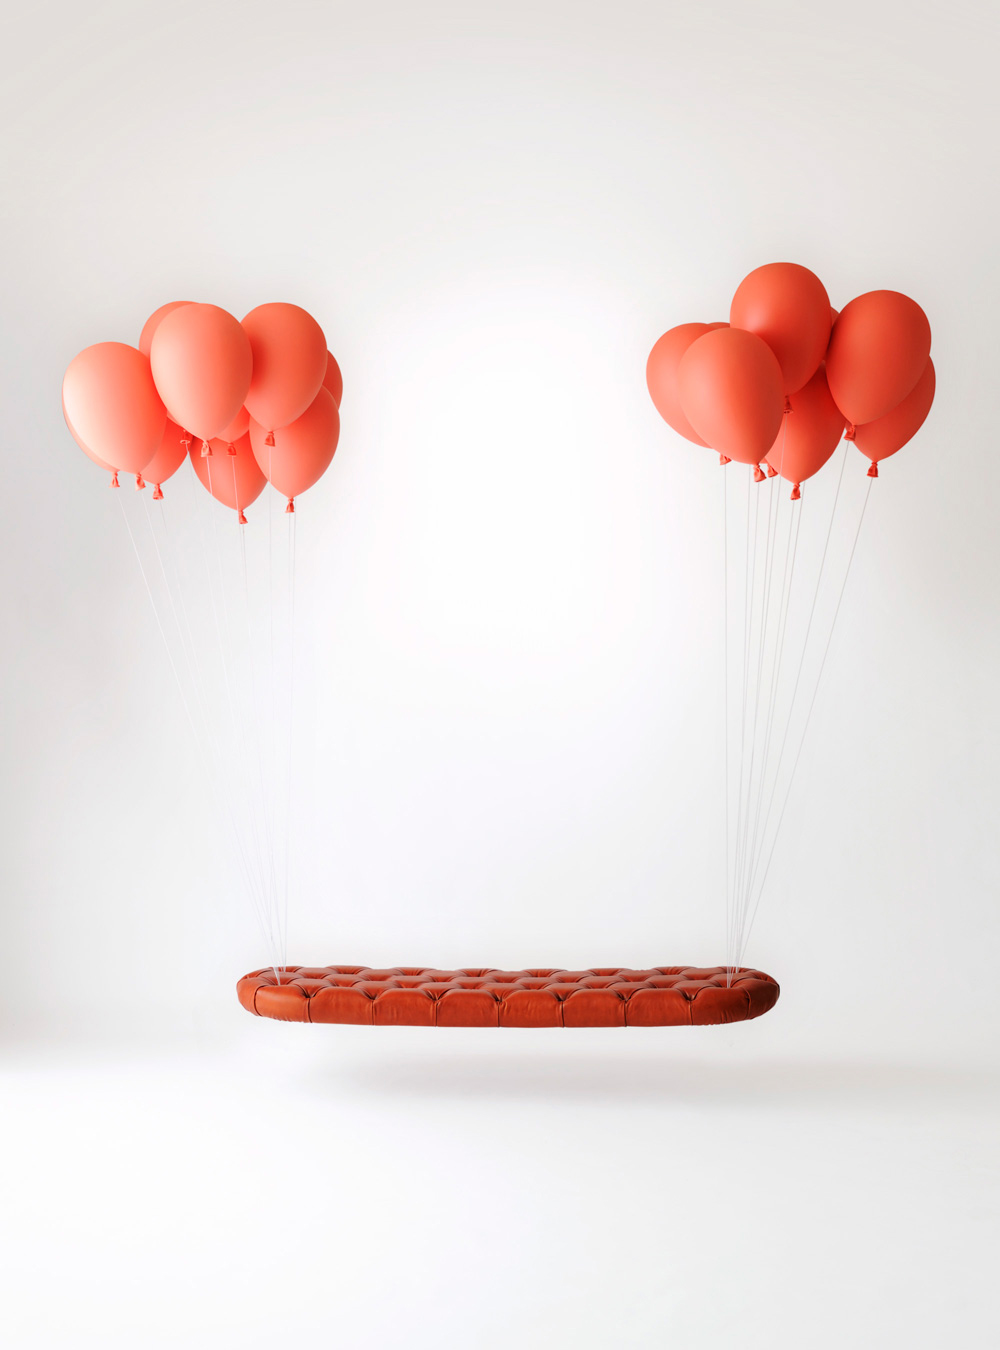 Floating Balloon Design3